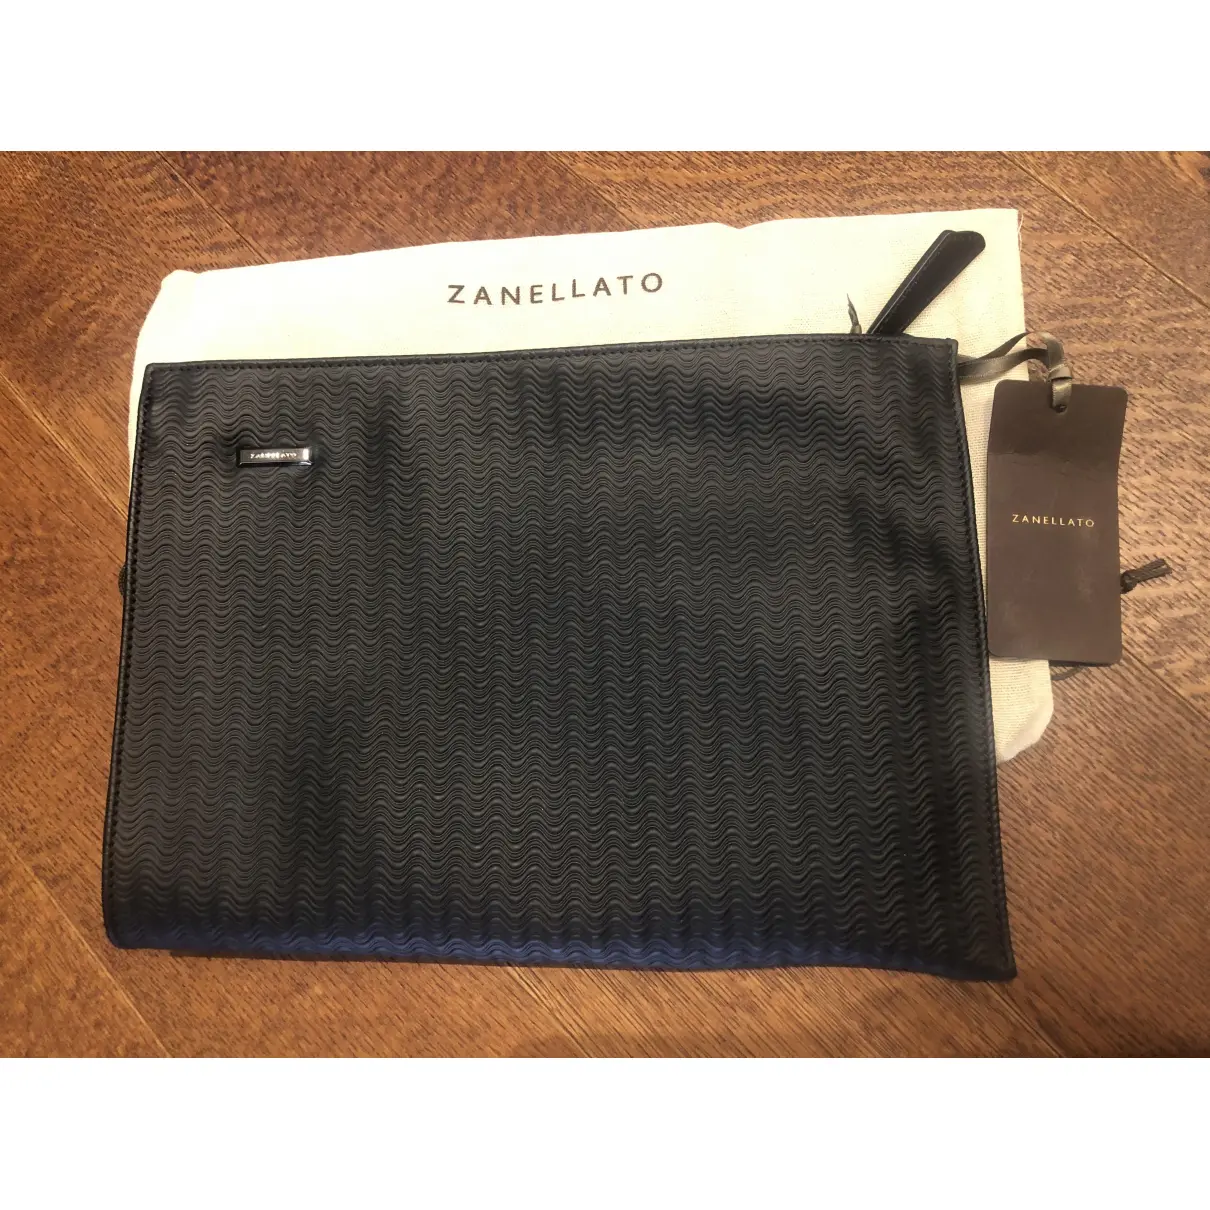 Buy Zanellato Leather small bag online